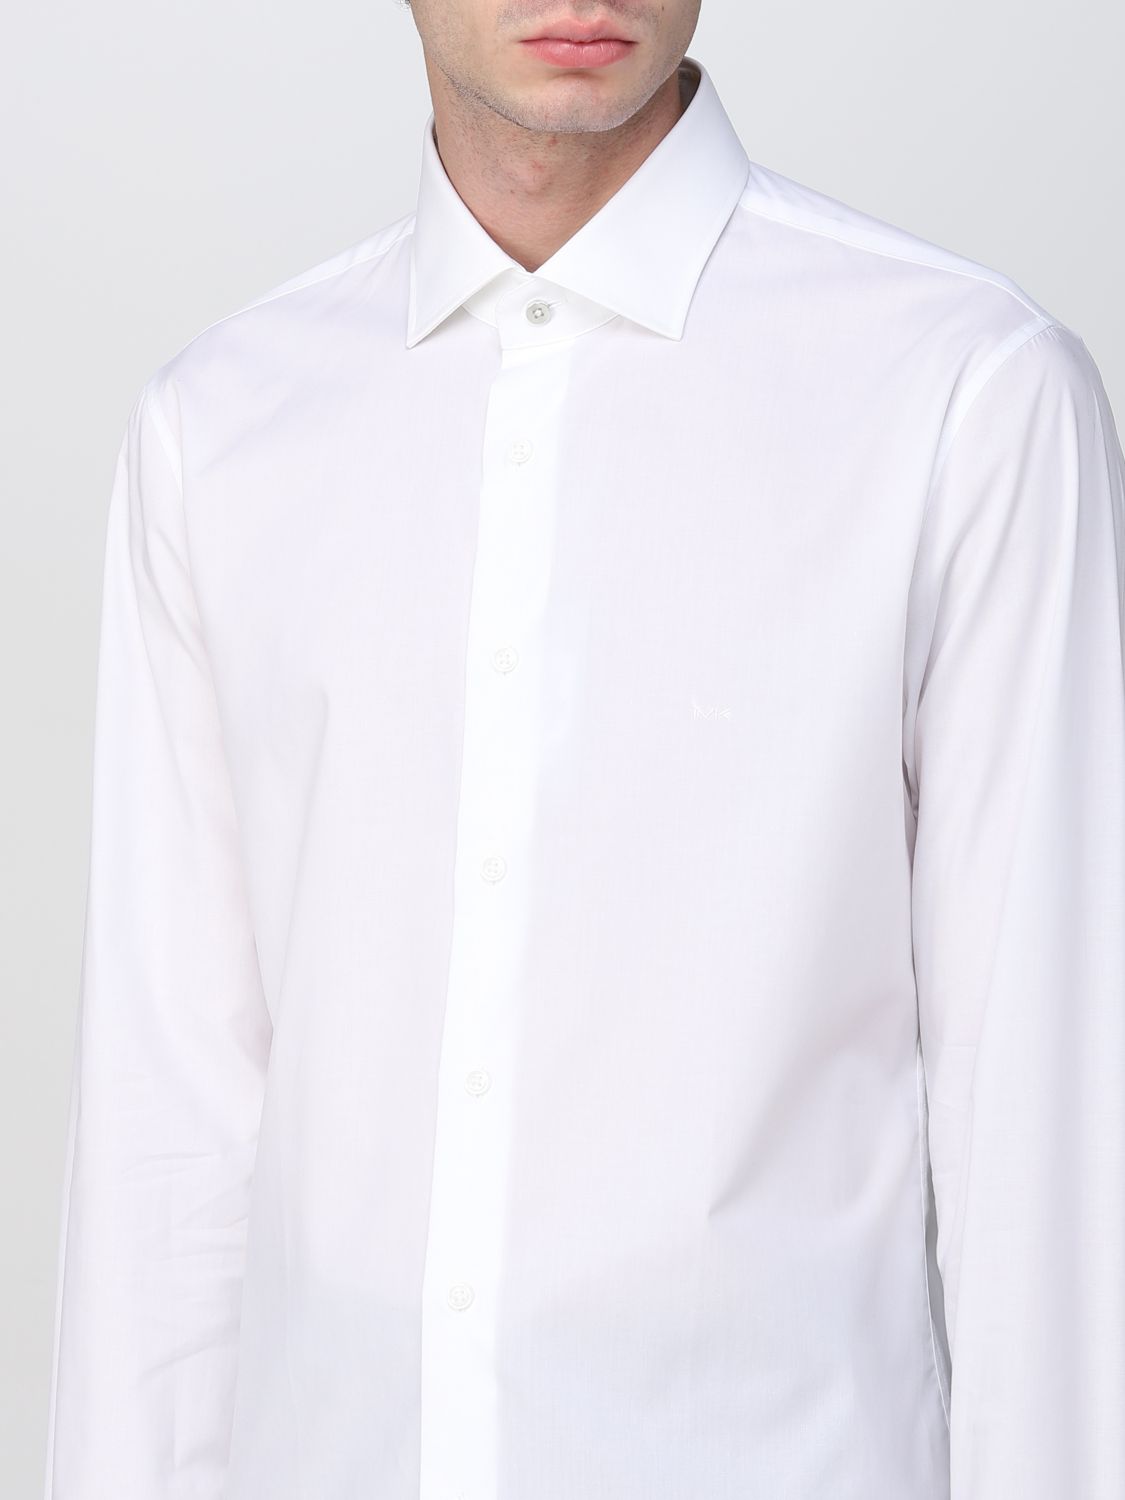 KORS: Camisa para Blanco | Camisa Michael Kors MD0MD90425 en línea en GIGLIO.COM